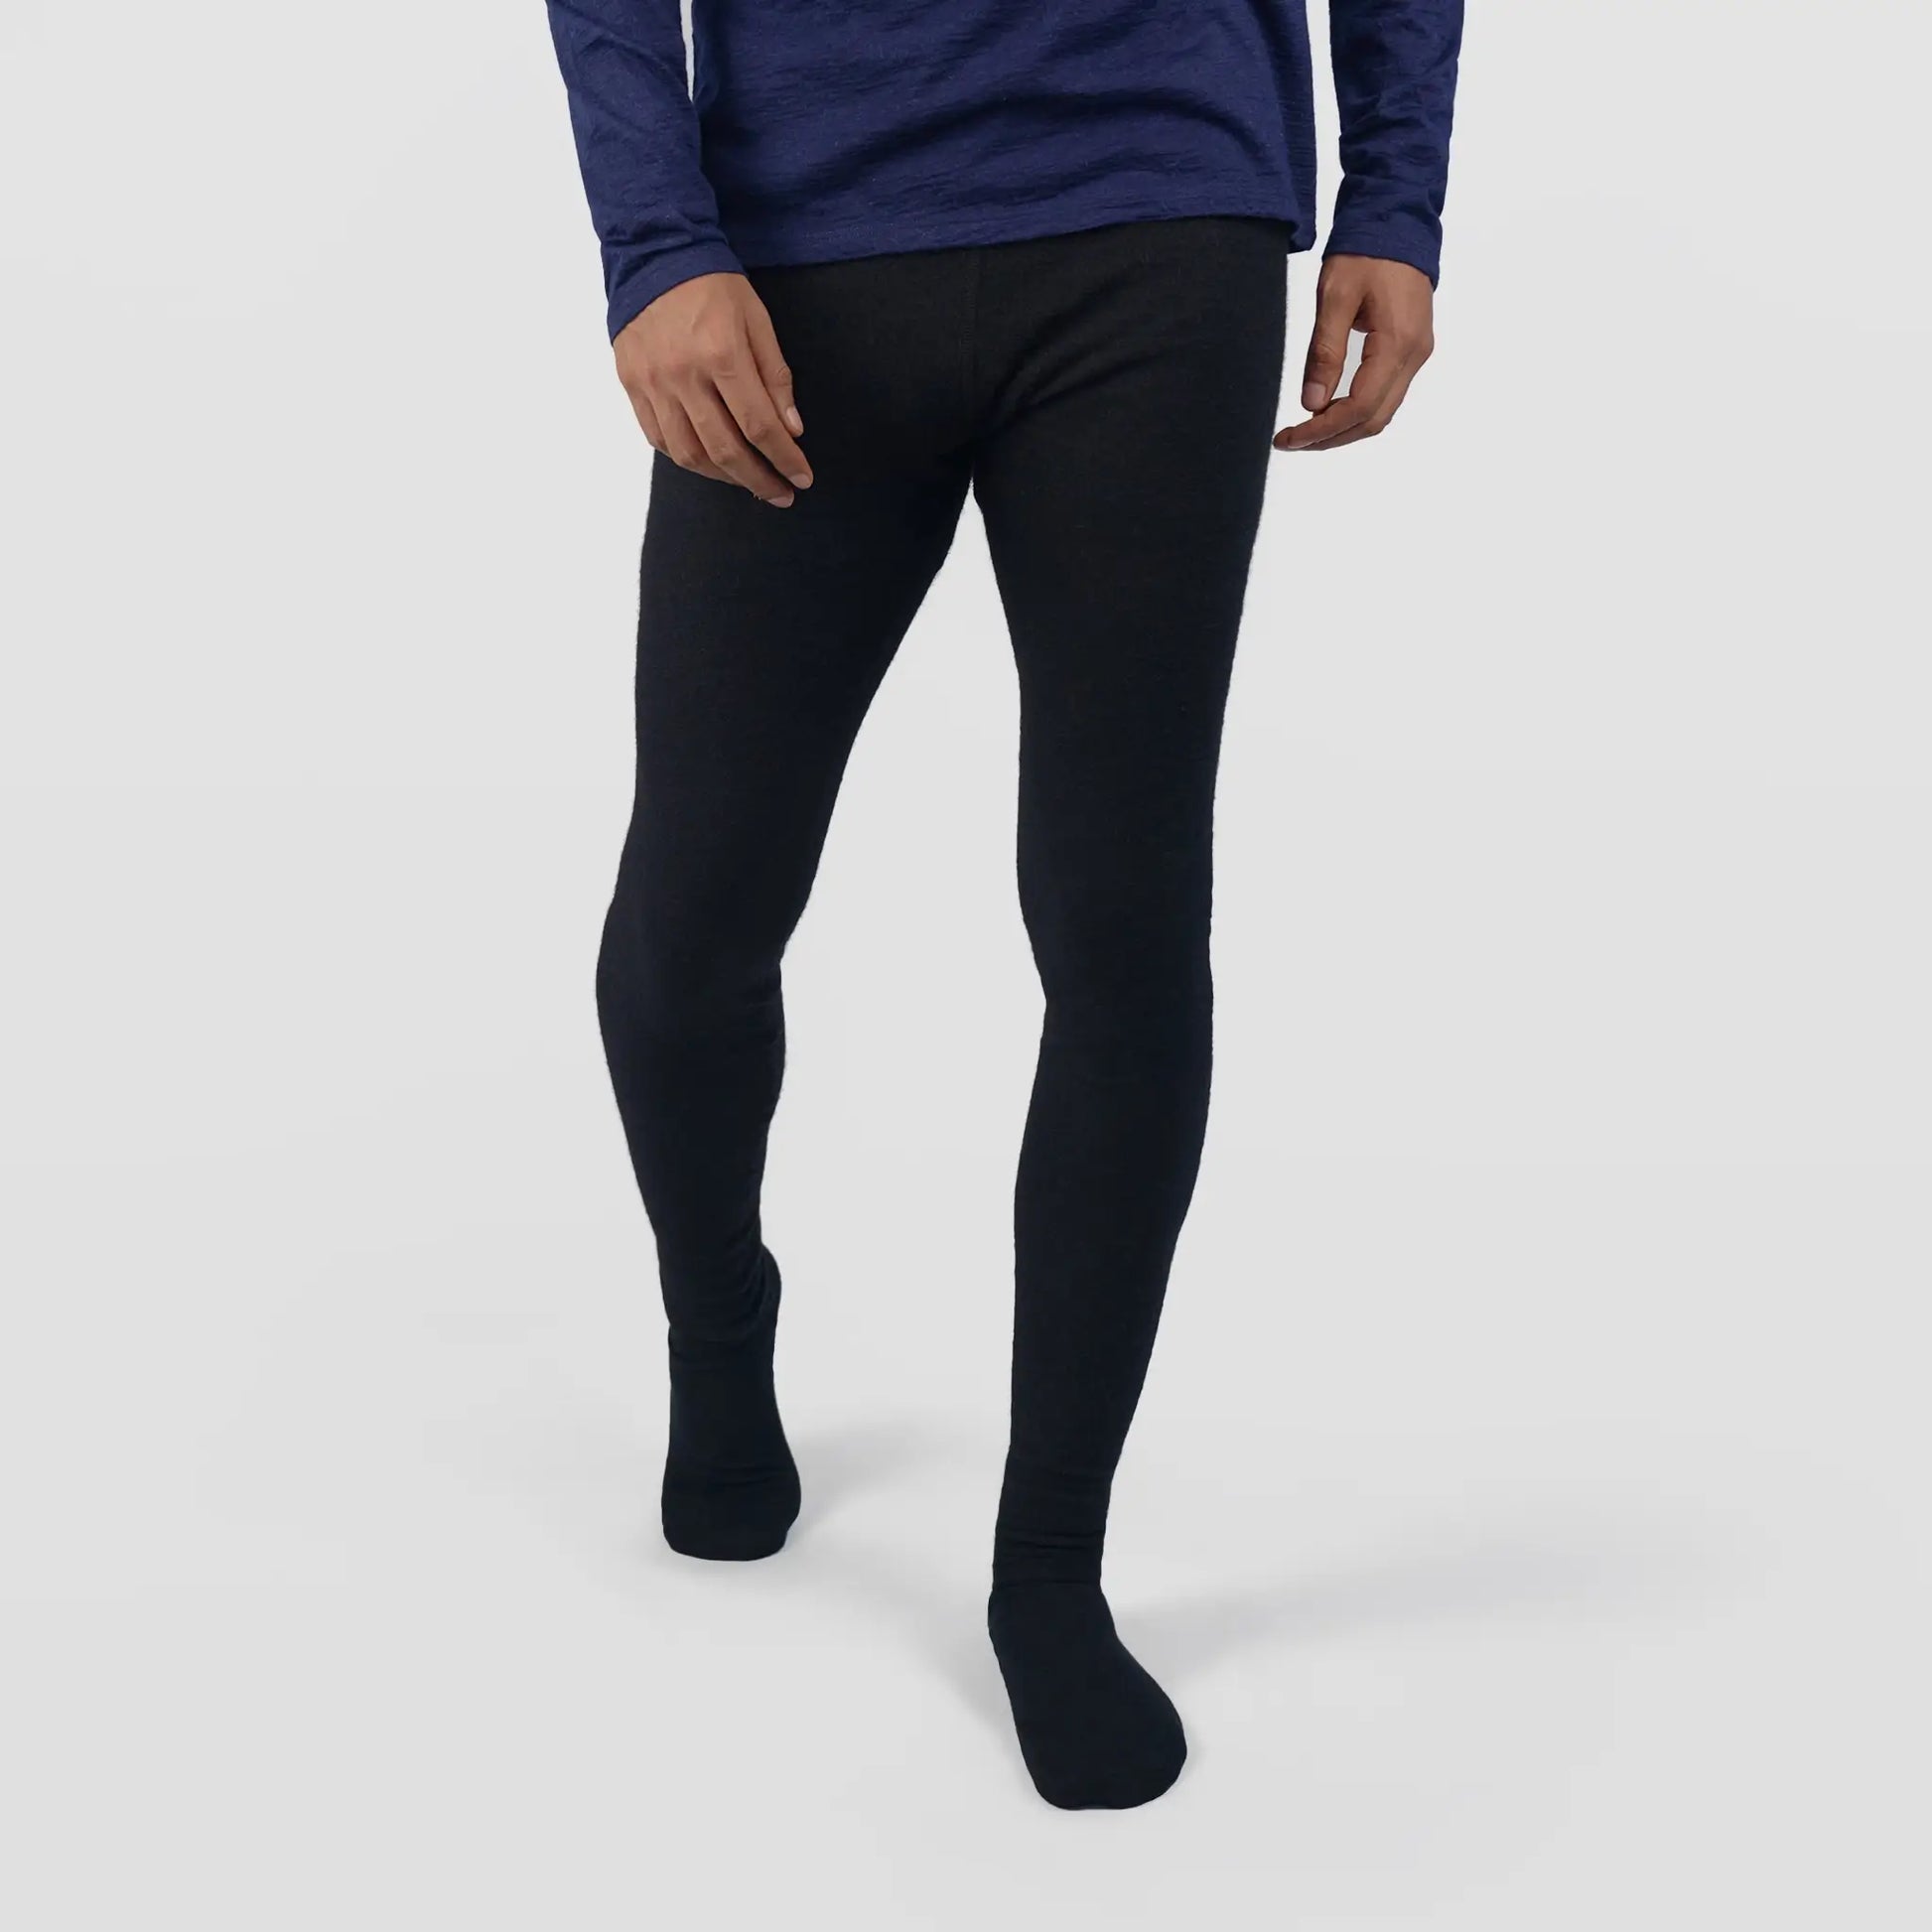 mens all purpose leggings lightweight 250 color black